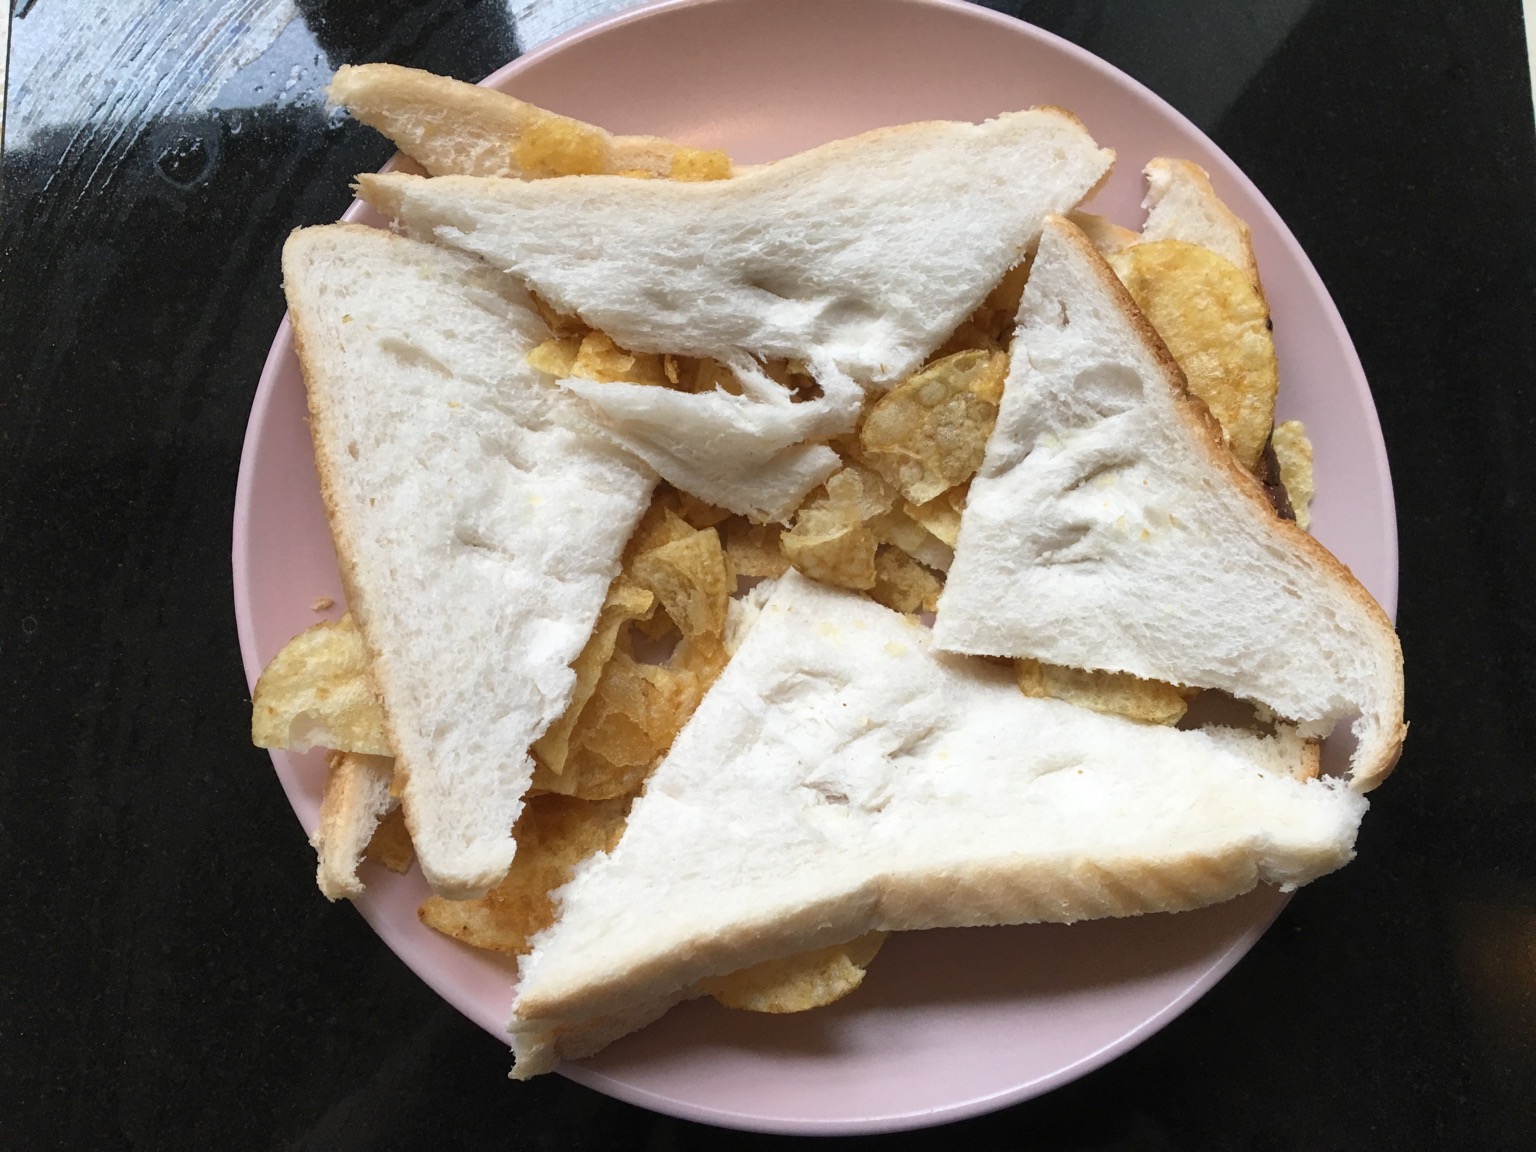 Diagonally-quartered white crisp sandwich